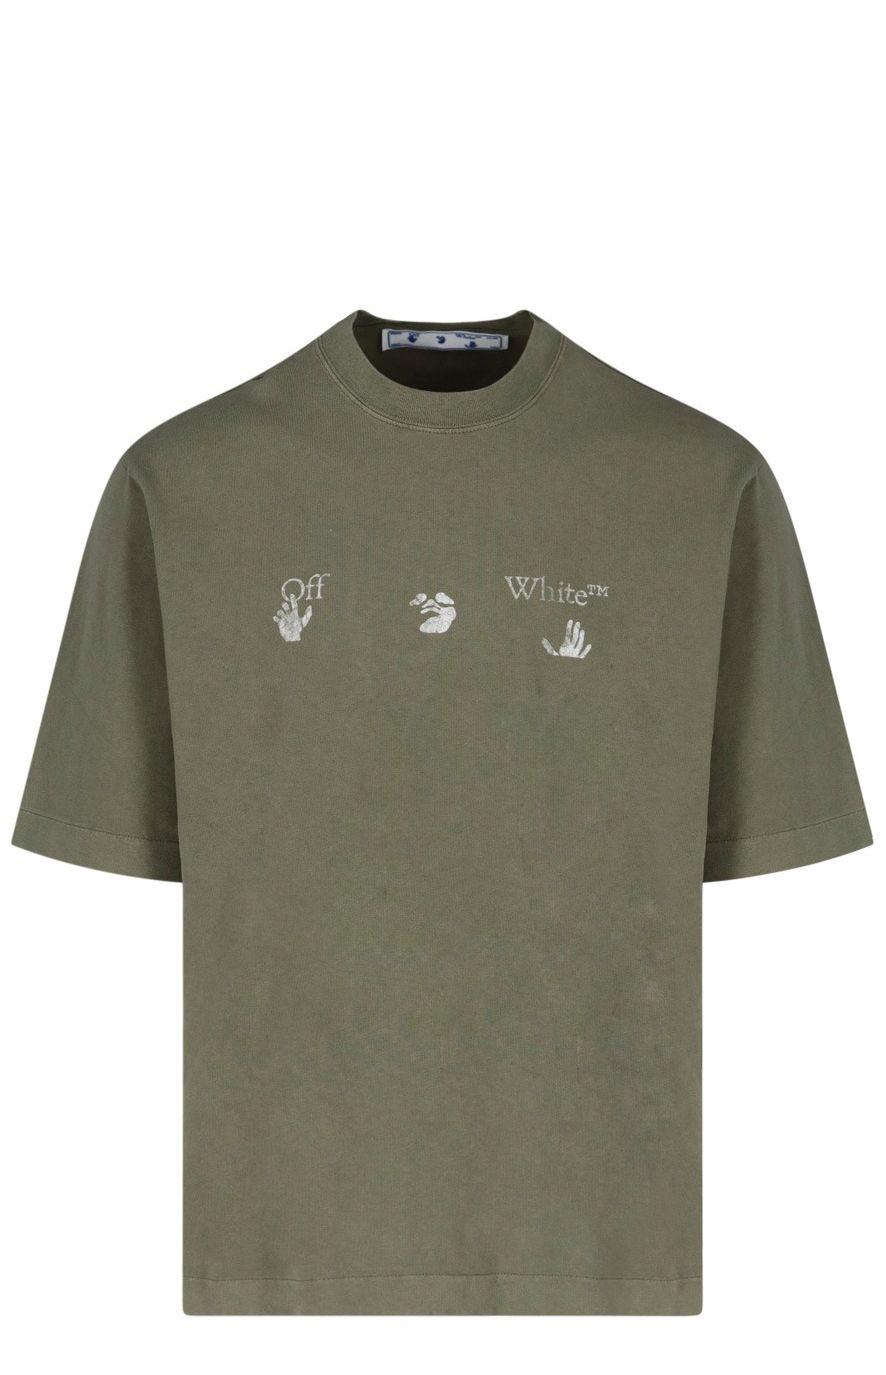 Off-White c/o Virgil Abloh Hands Off Crewneck T-shirt in Green for Men